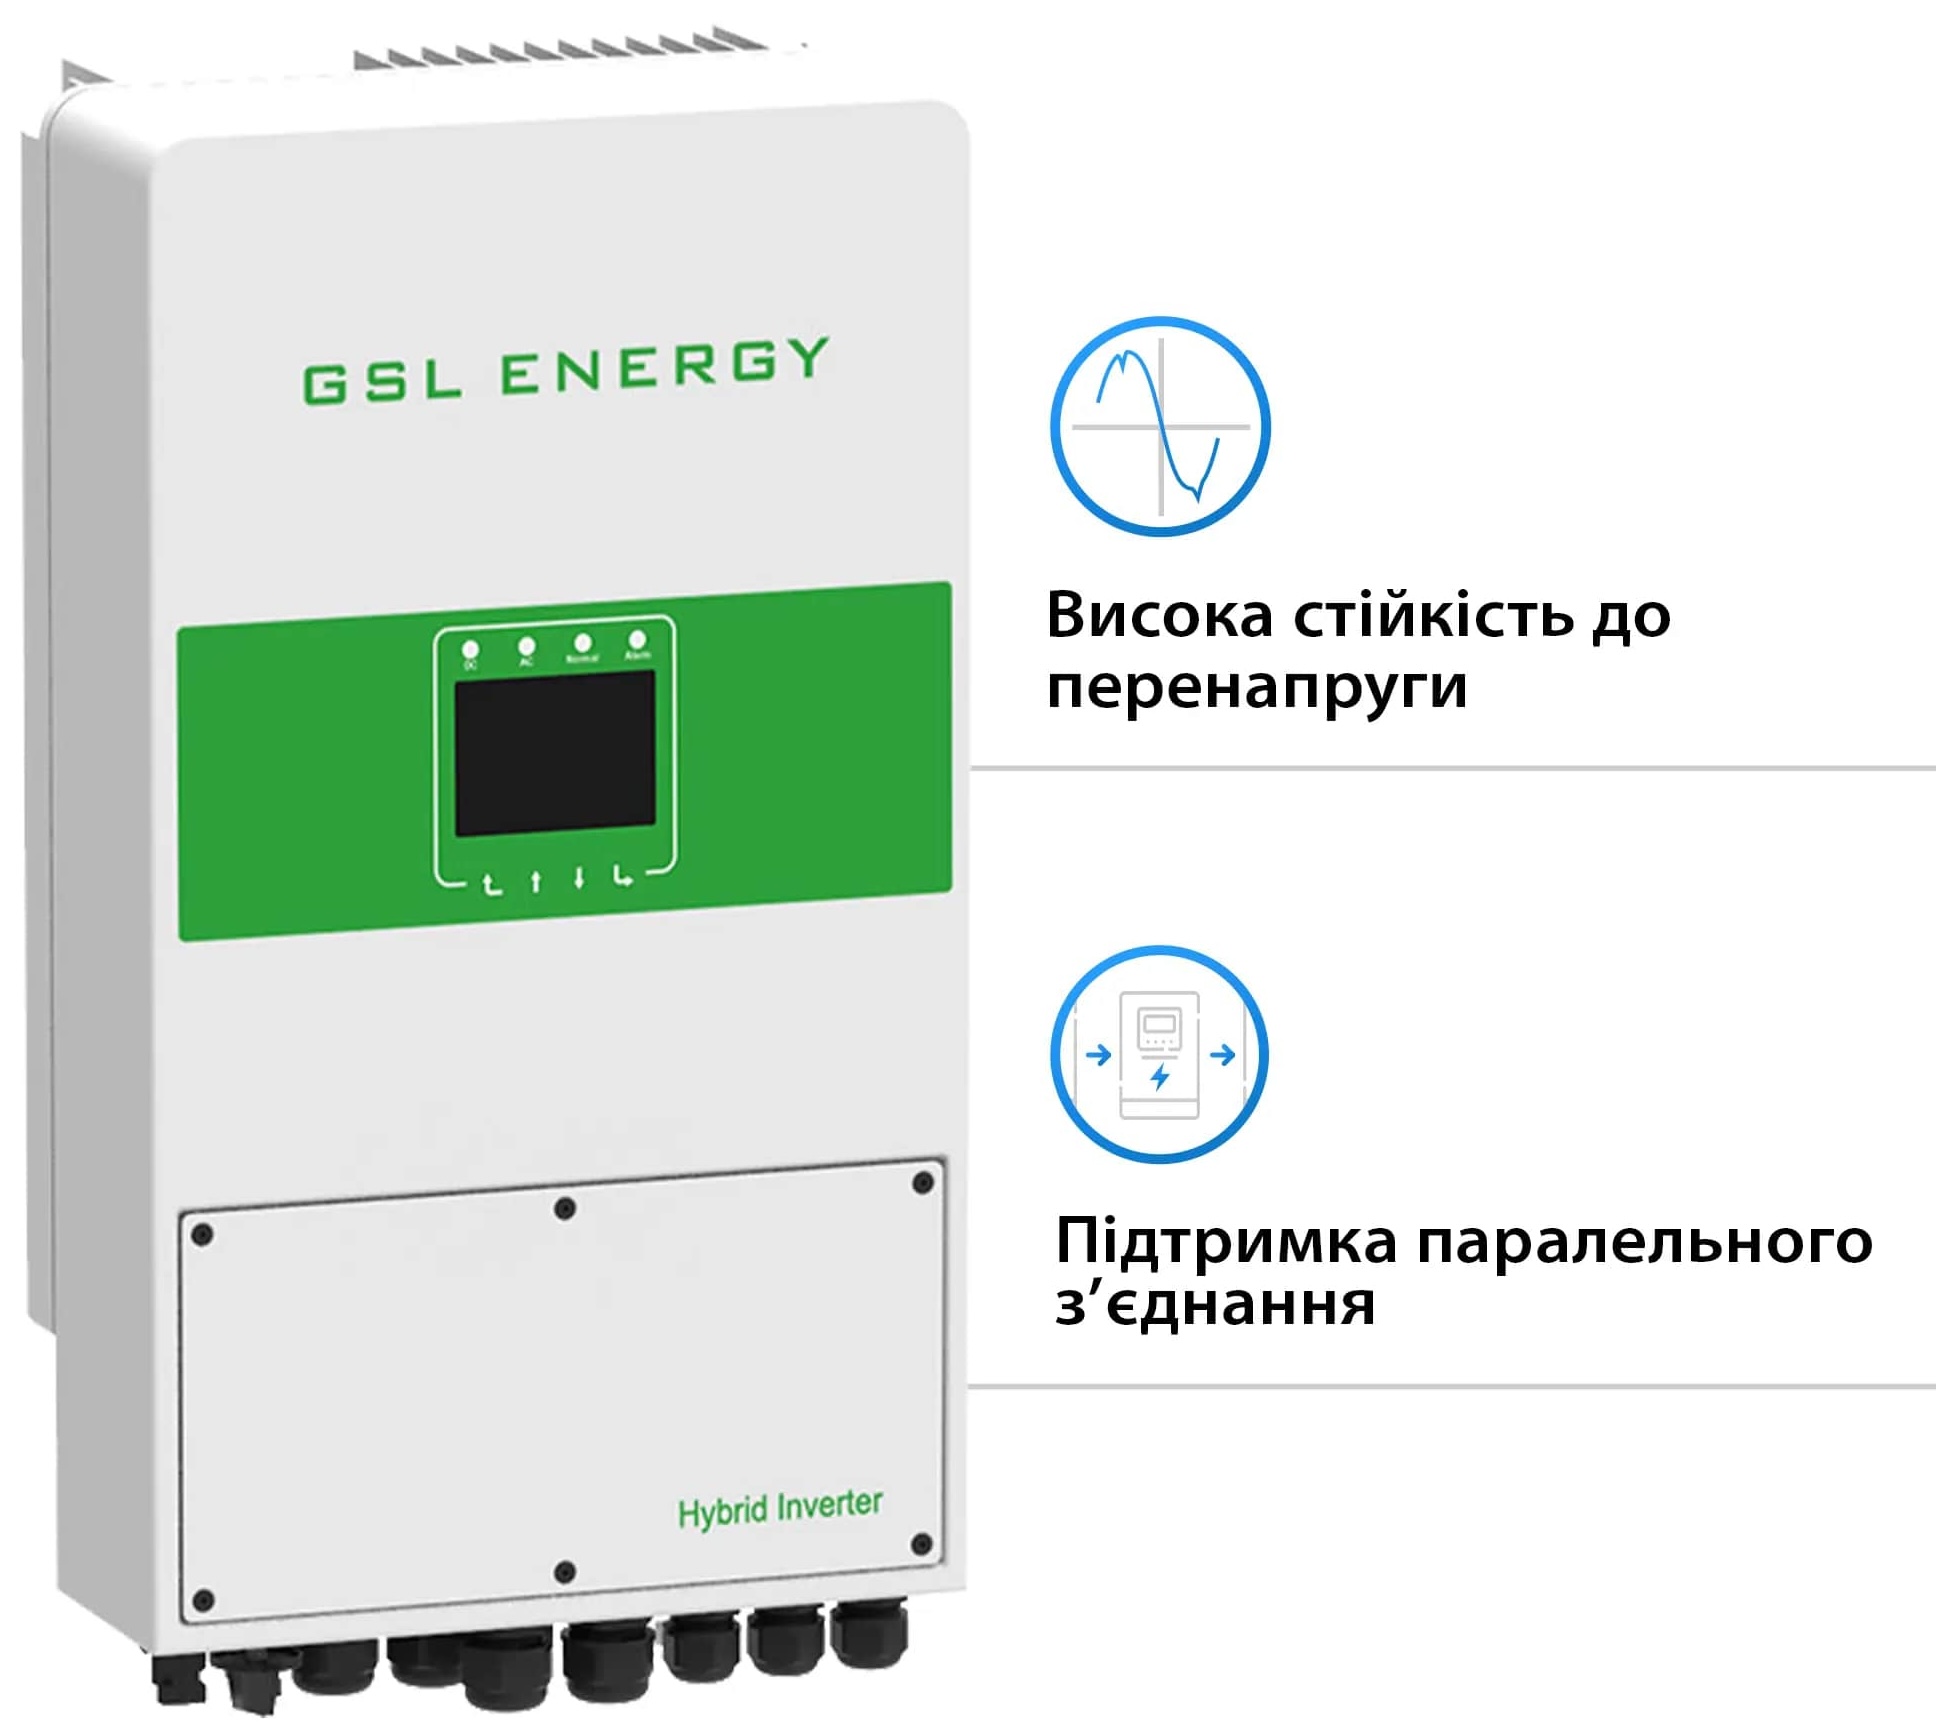 продаём GSL 5kVA 230V Single Phase (GSL-H-5.0K-EU) в Украине - фото 4